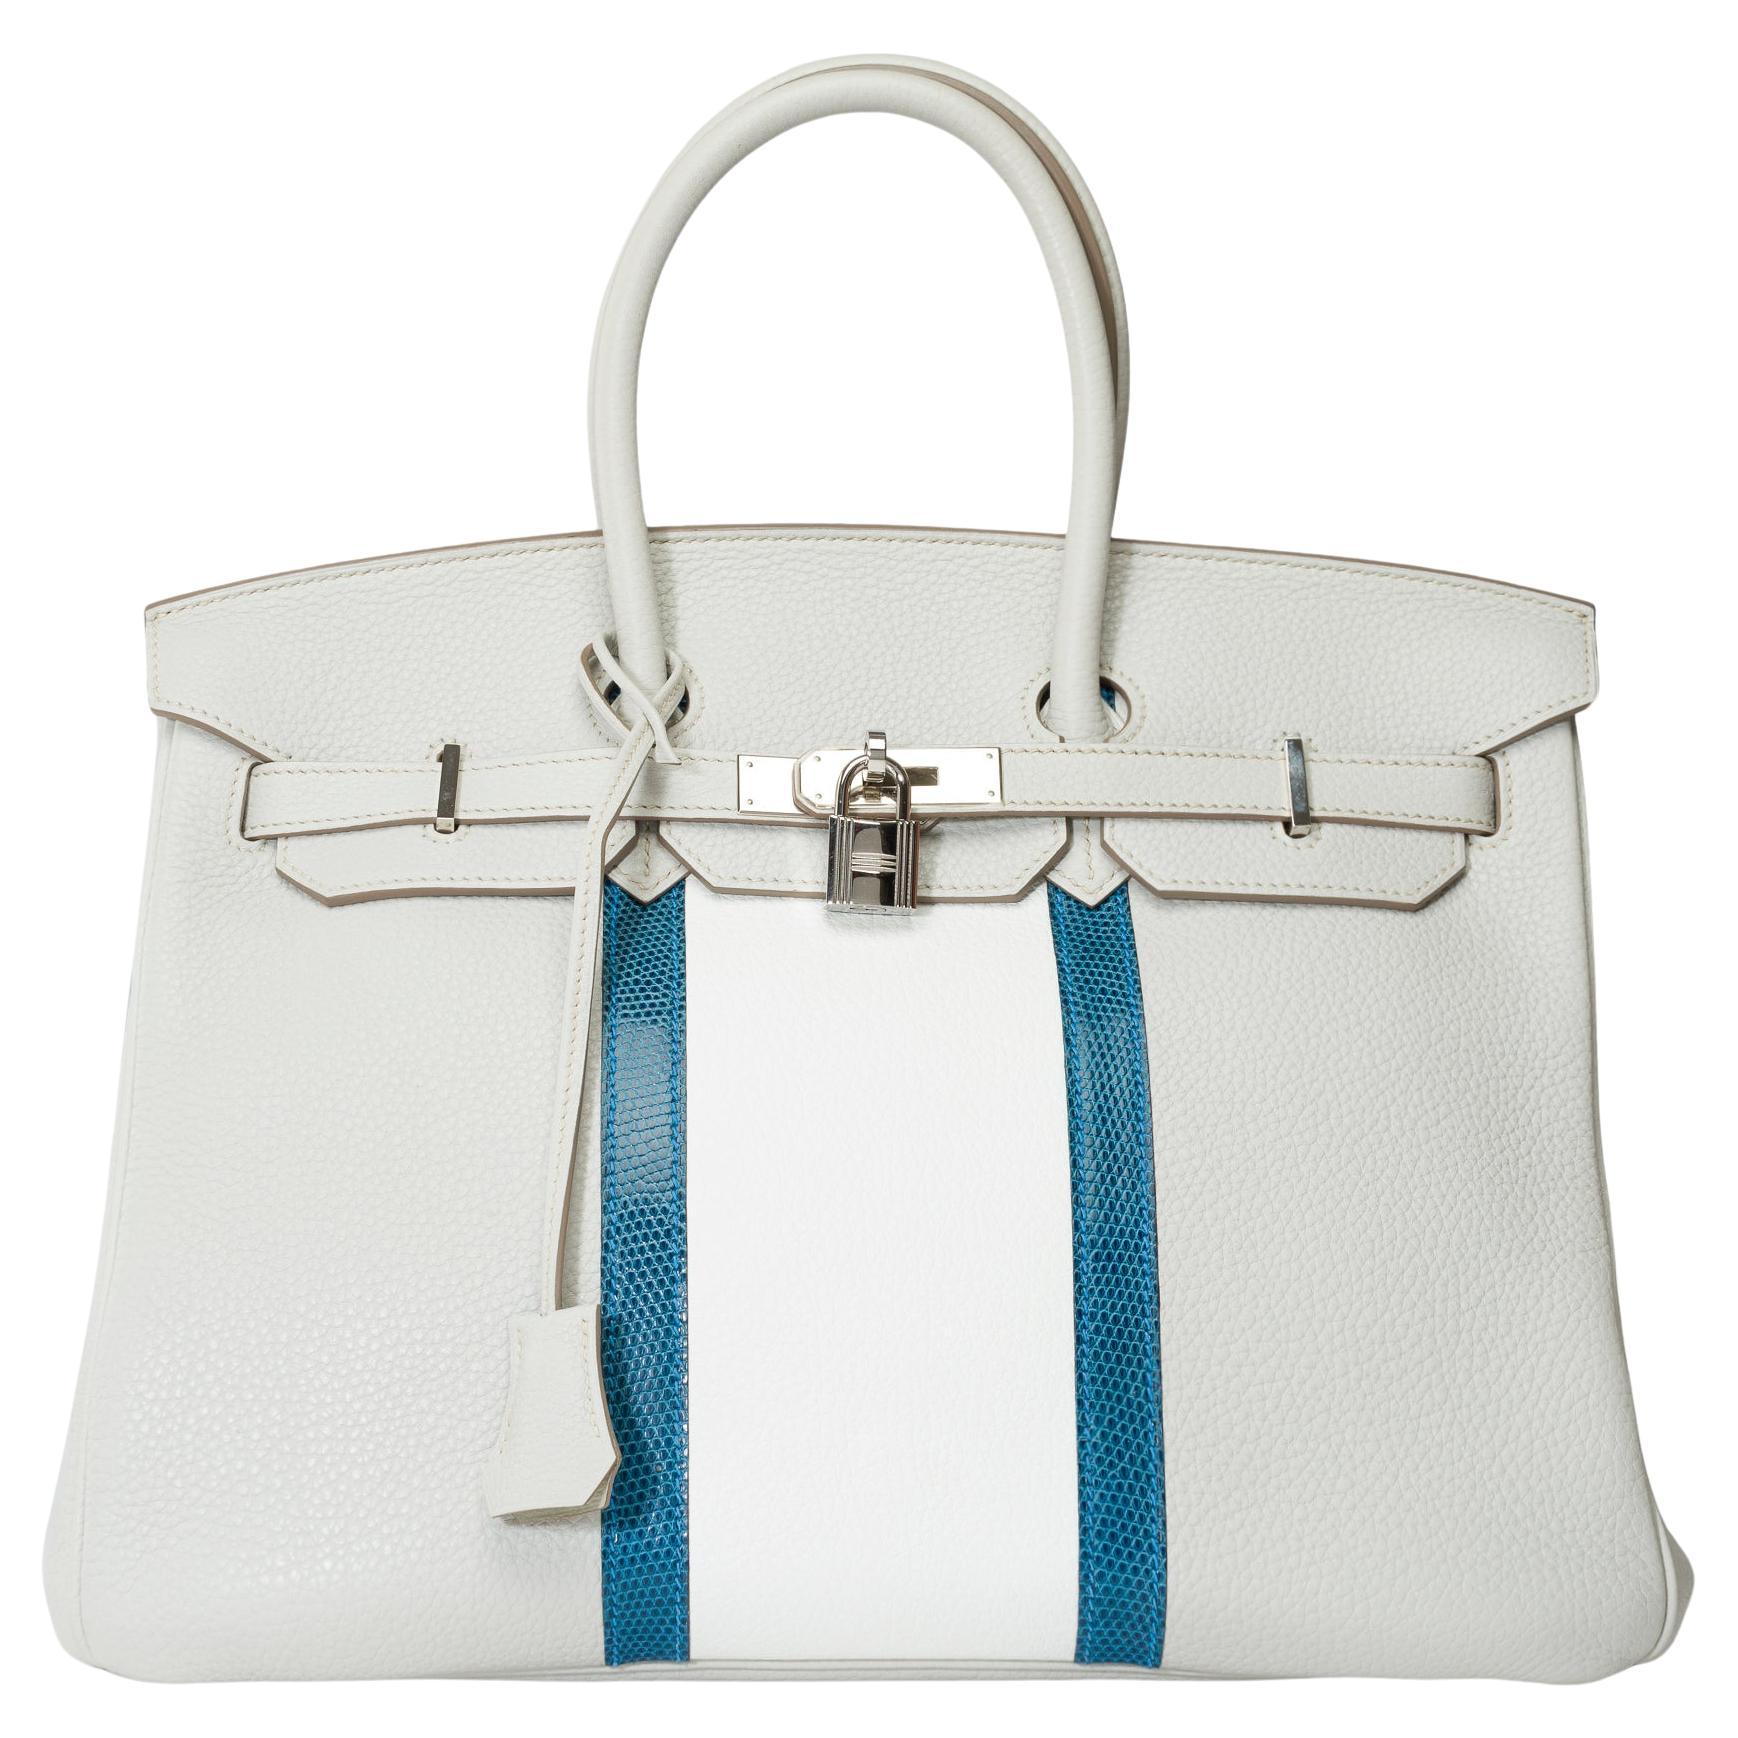 Rare sac à main Hermès Birkin Club 35 en cuir gris, blanc et lézard bleu, SHW en vente